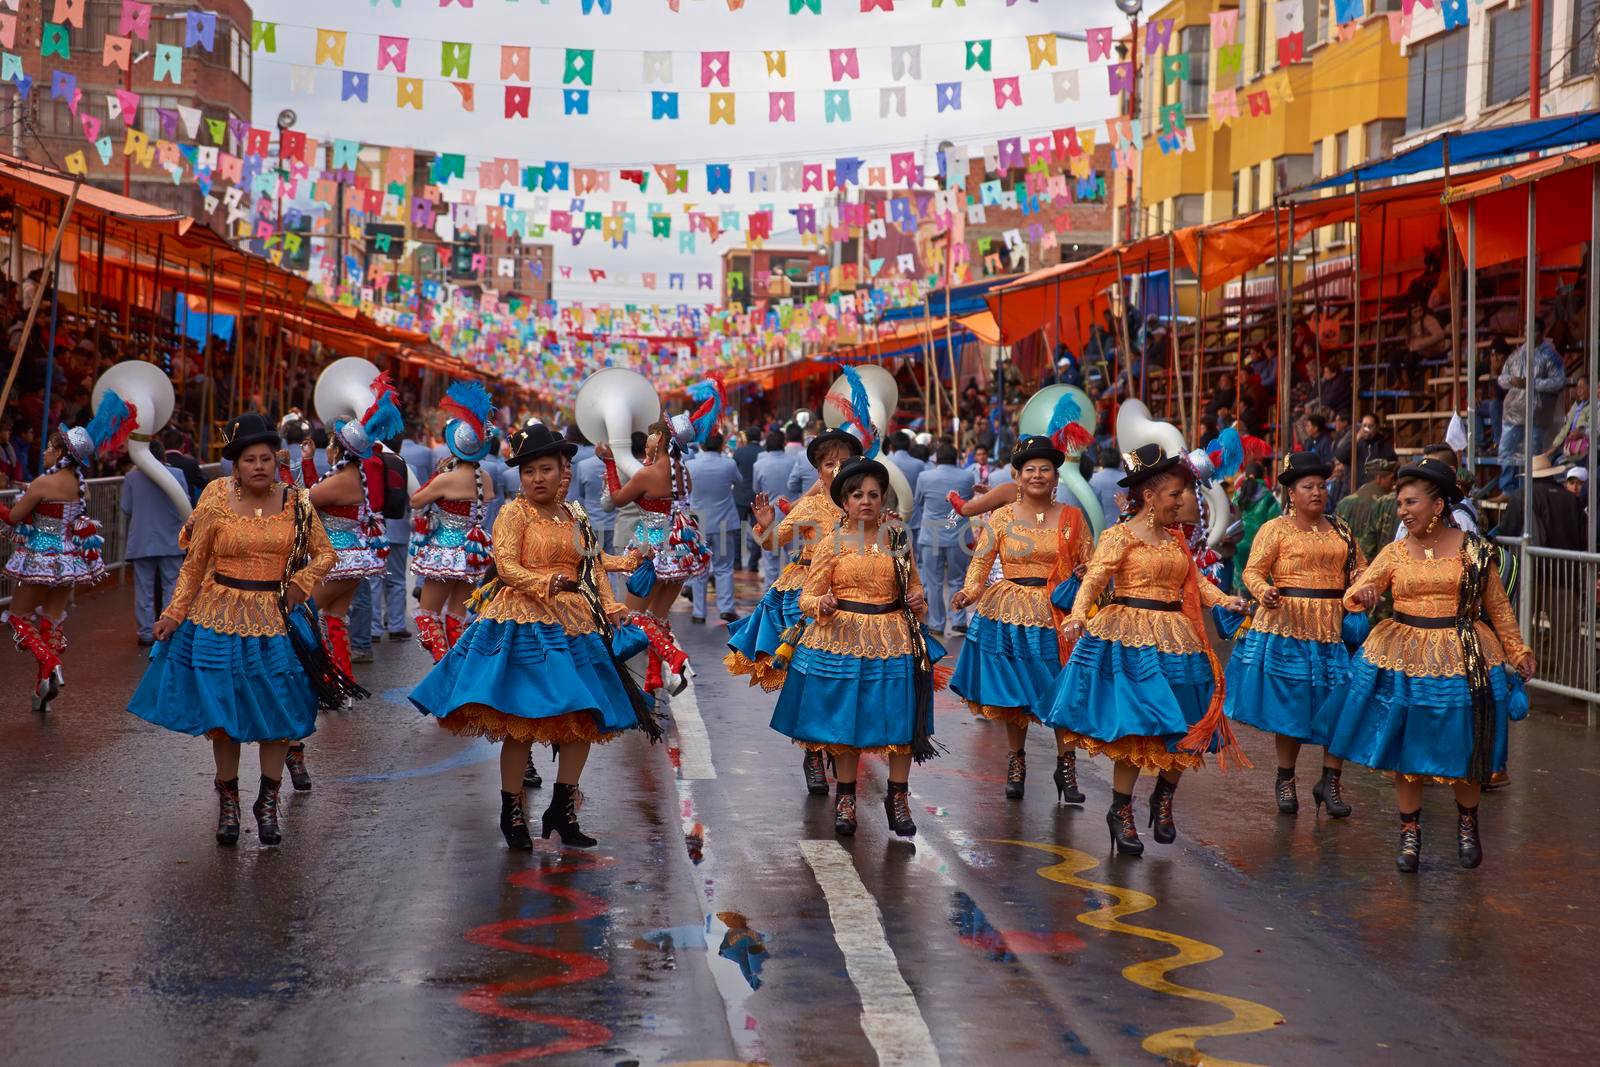 Morenada Dancers at the Oruro Carnival by JeremyRichards